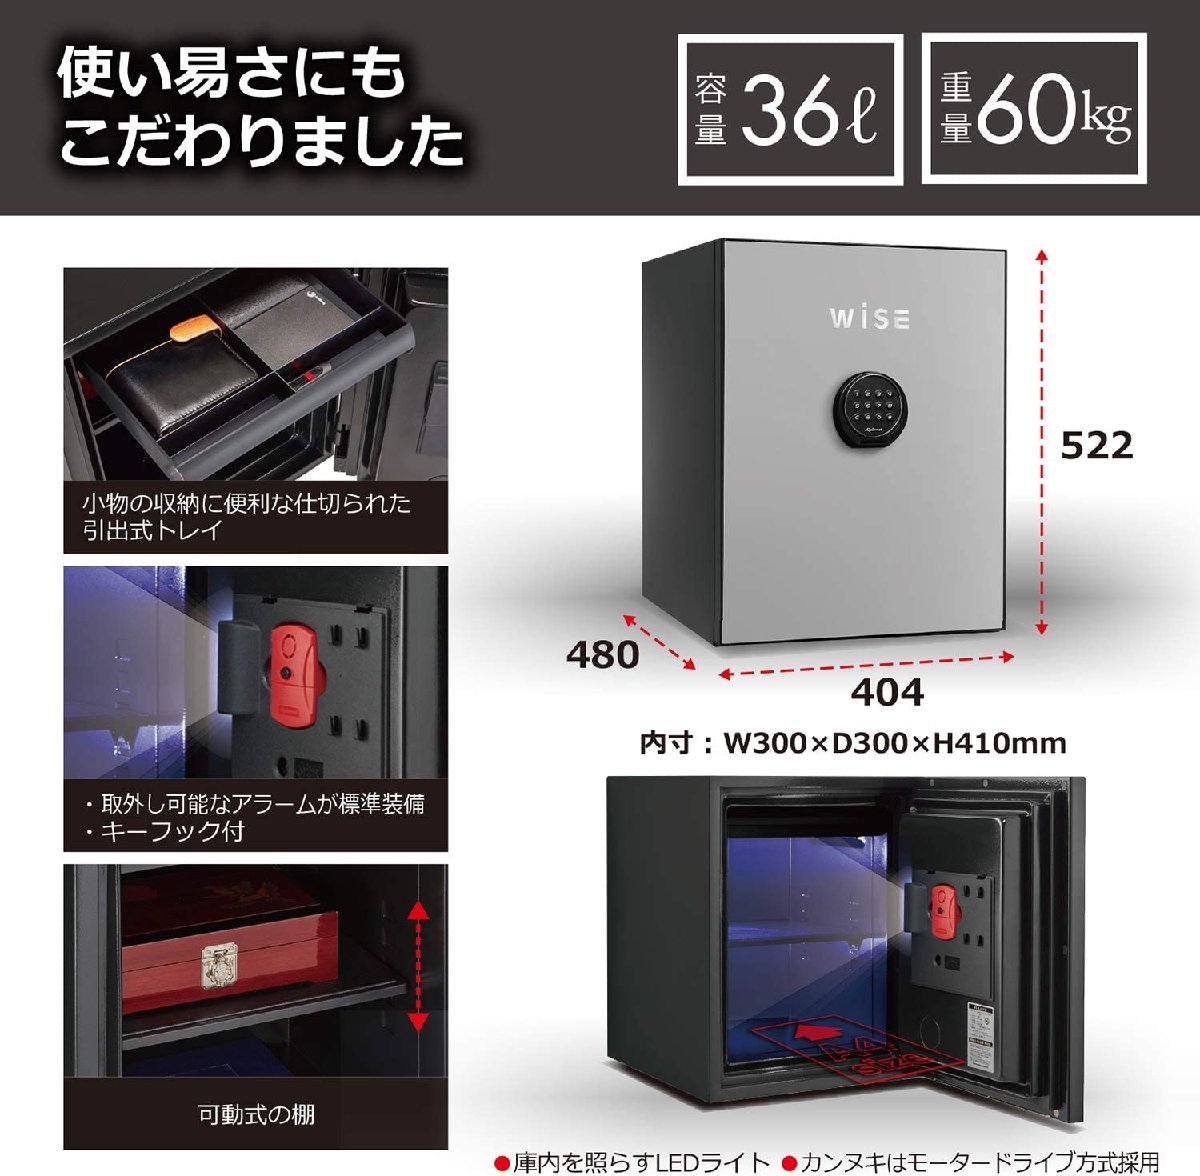  fire-proof safe light gray [WS500AL-LG]ti Pro mat stylish interior design safe crime prevention disaster prevention security 